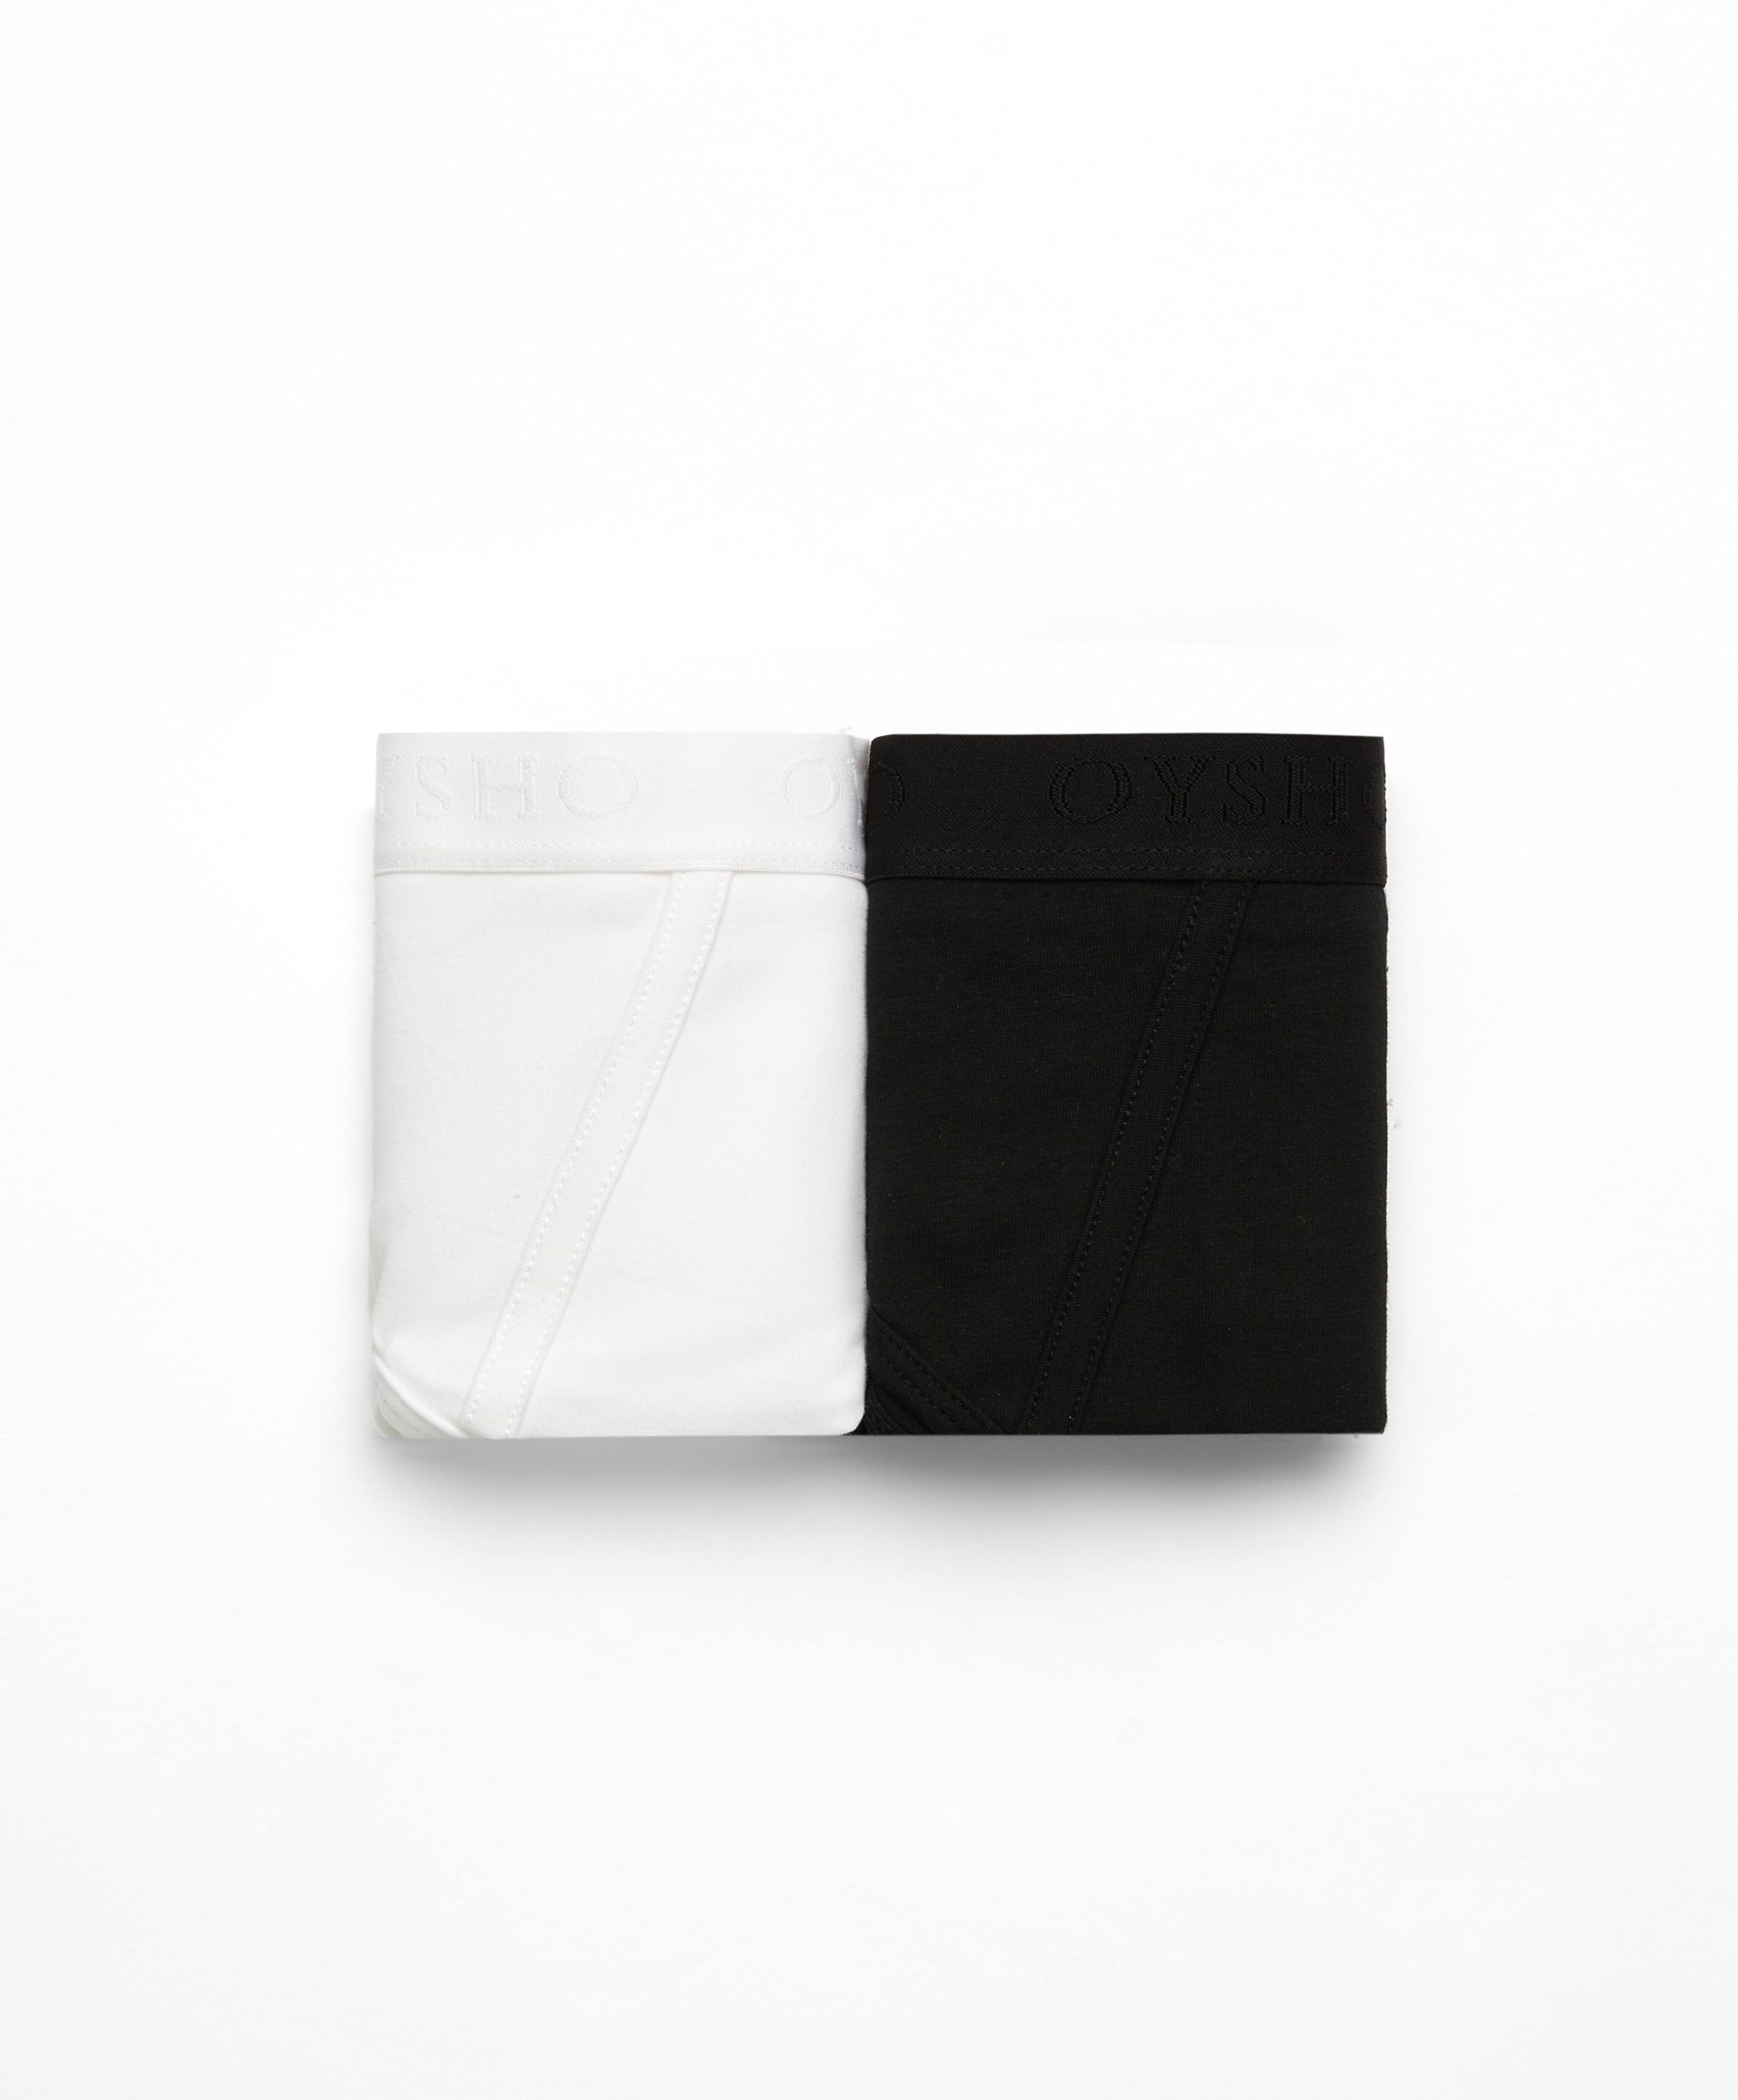 2 cotton blend high-rise cheeky briefs with logo